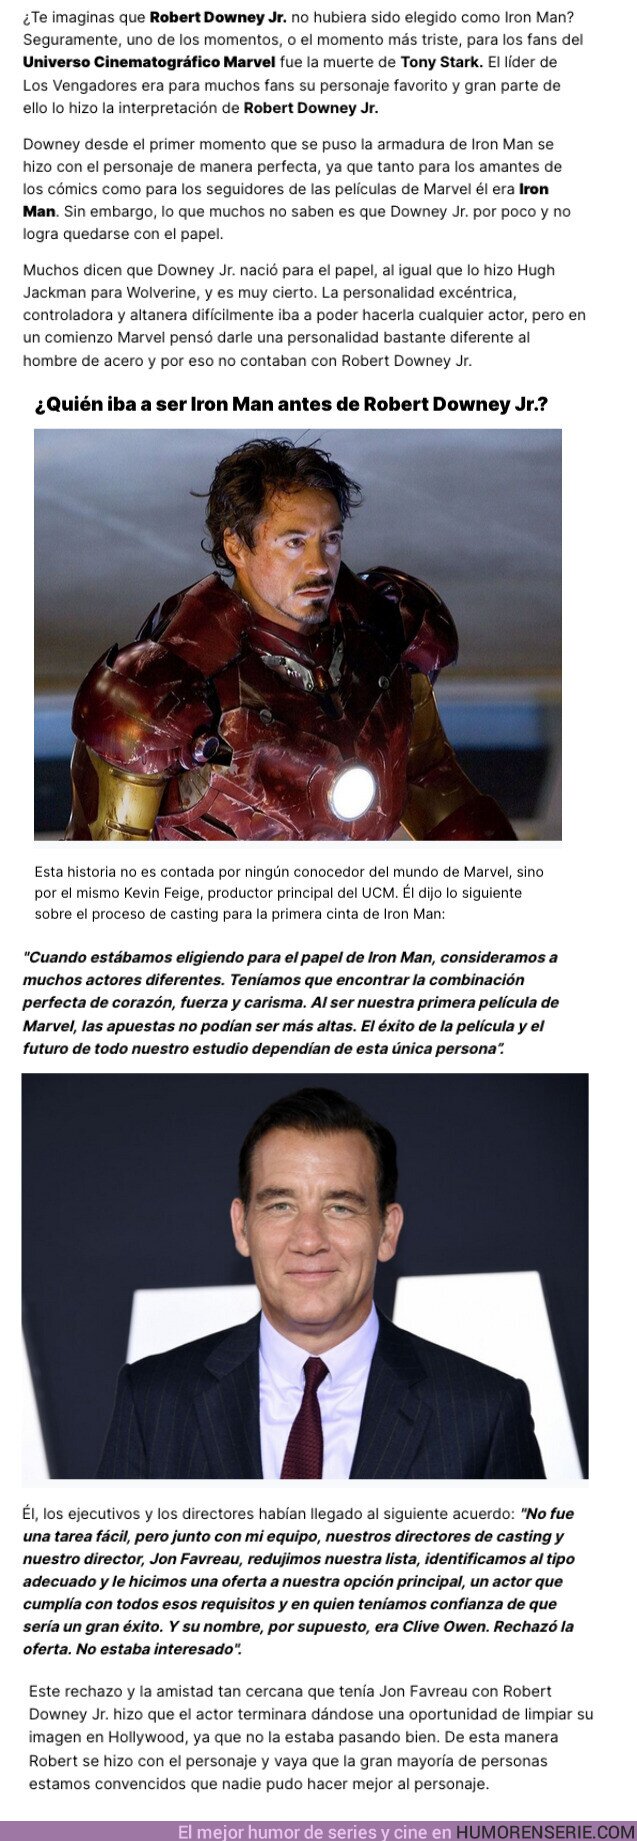 124398 - GALERÍA: Kevin Feige revela quien iba a ser el protagonista de Iron Man antes de Robert Downey Jr